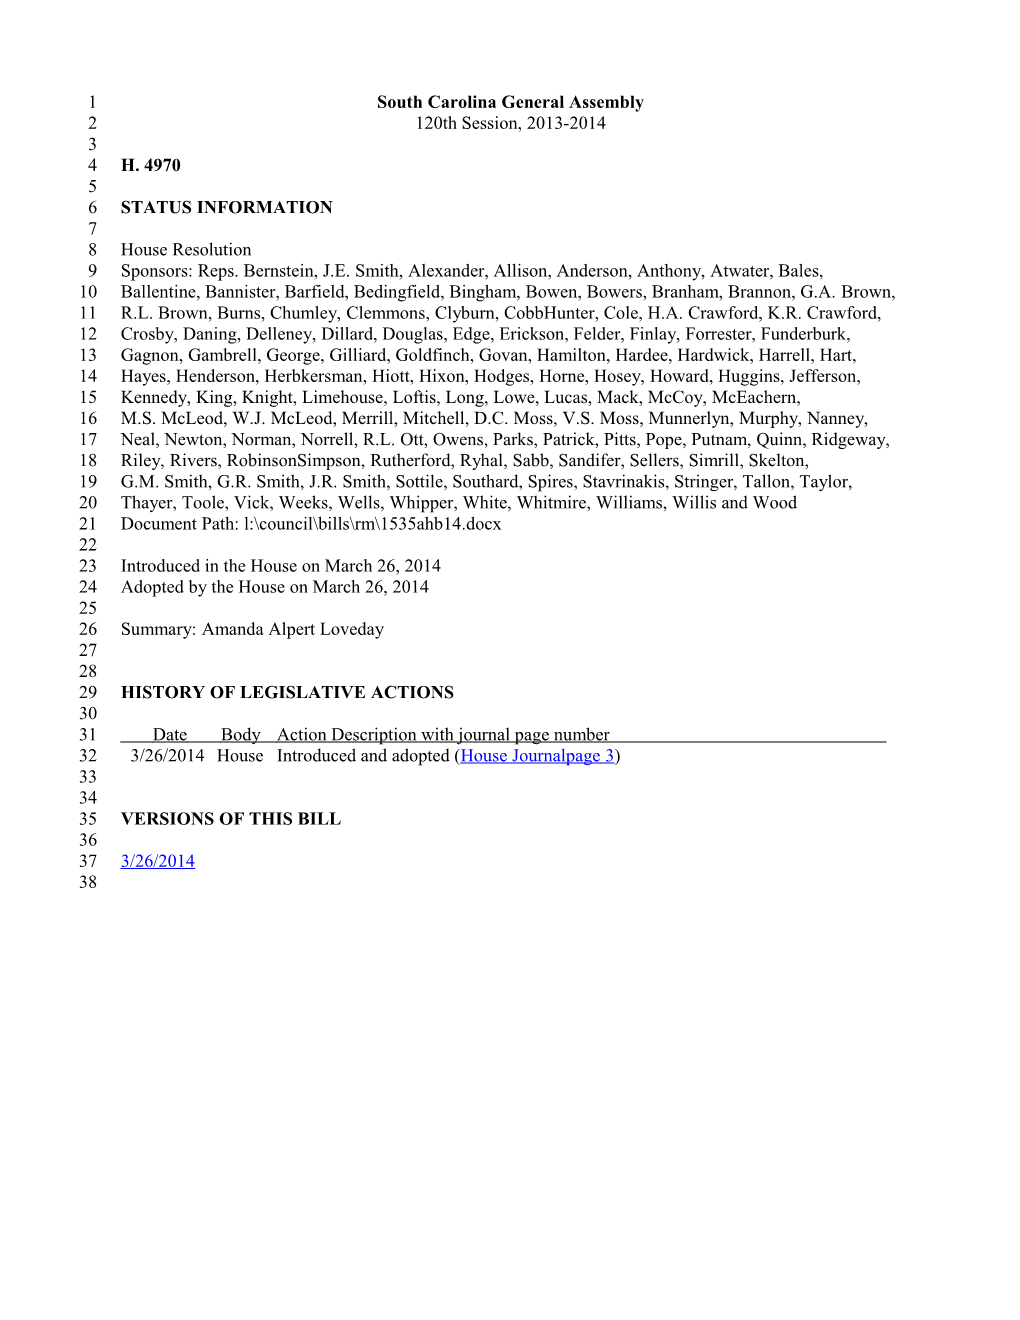 2013-2014 Bill 4970: Amanda Alpert Loveday - South Carolina Legislature Online